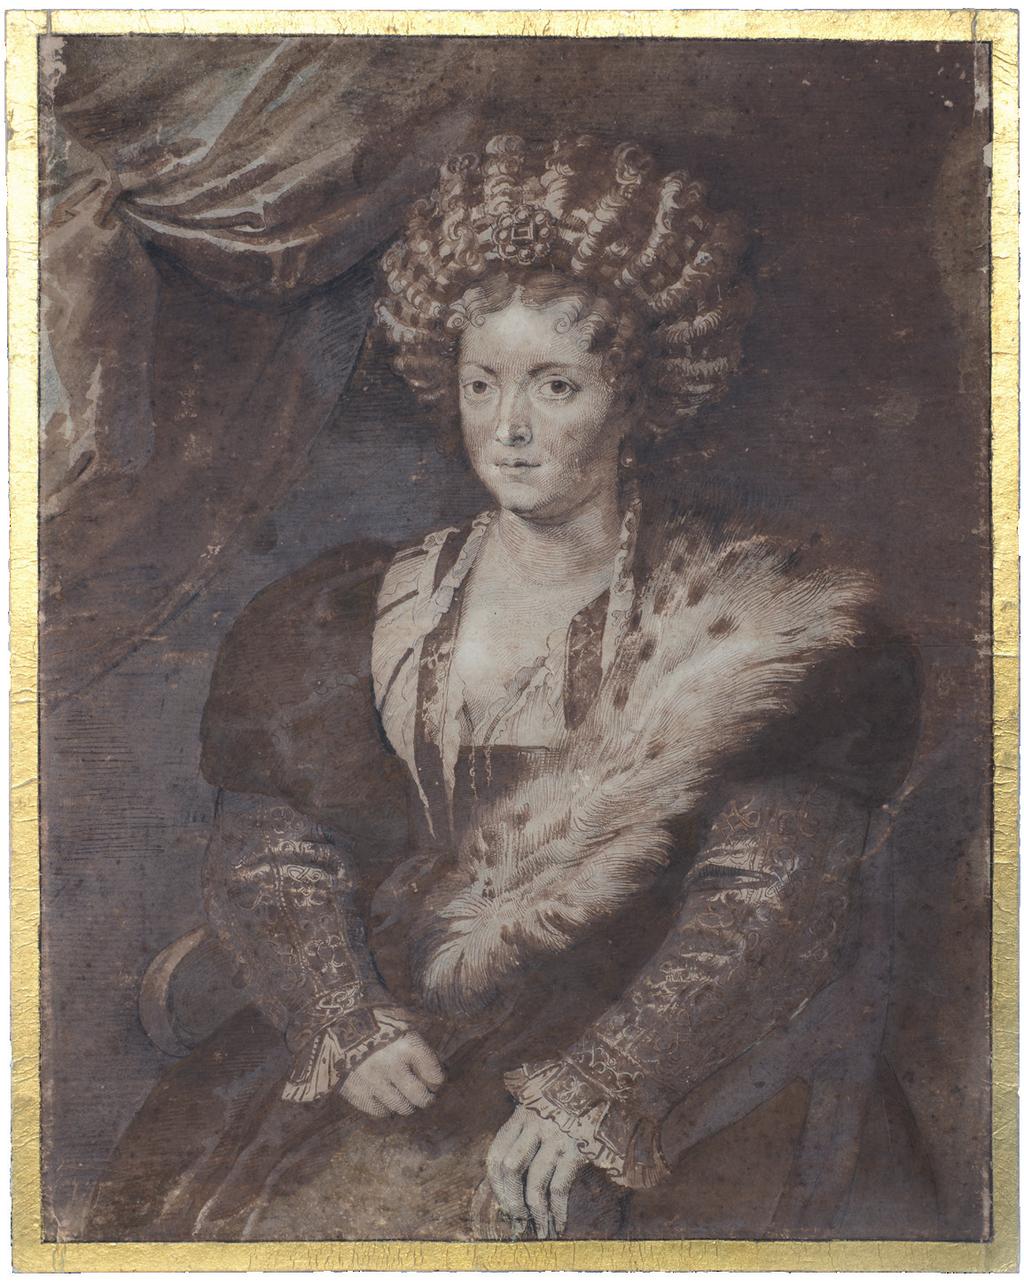 2, detail: paraph of Everhard Jabach (photograph Stad Lier). Fig. 3 Lucas Vorsterman after Rubens, Portrait of Isabella d Este in black. Engraving, 420 318 mm.